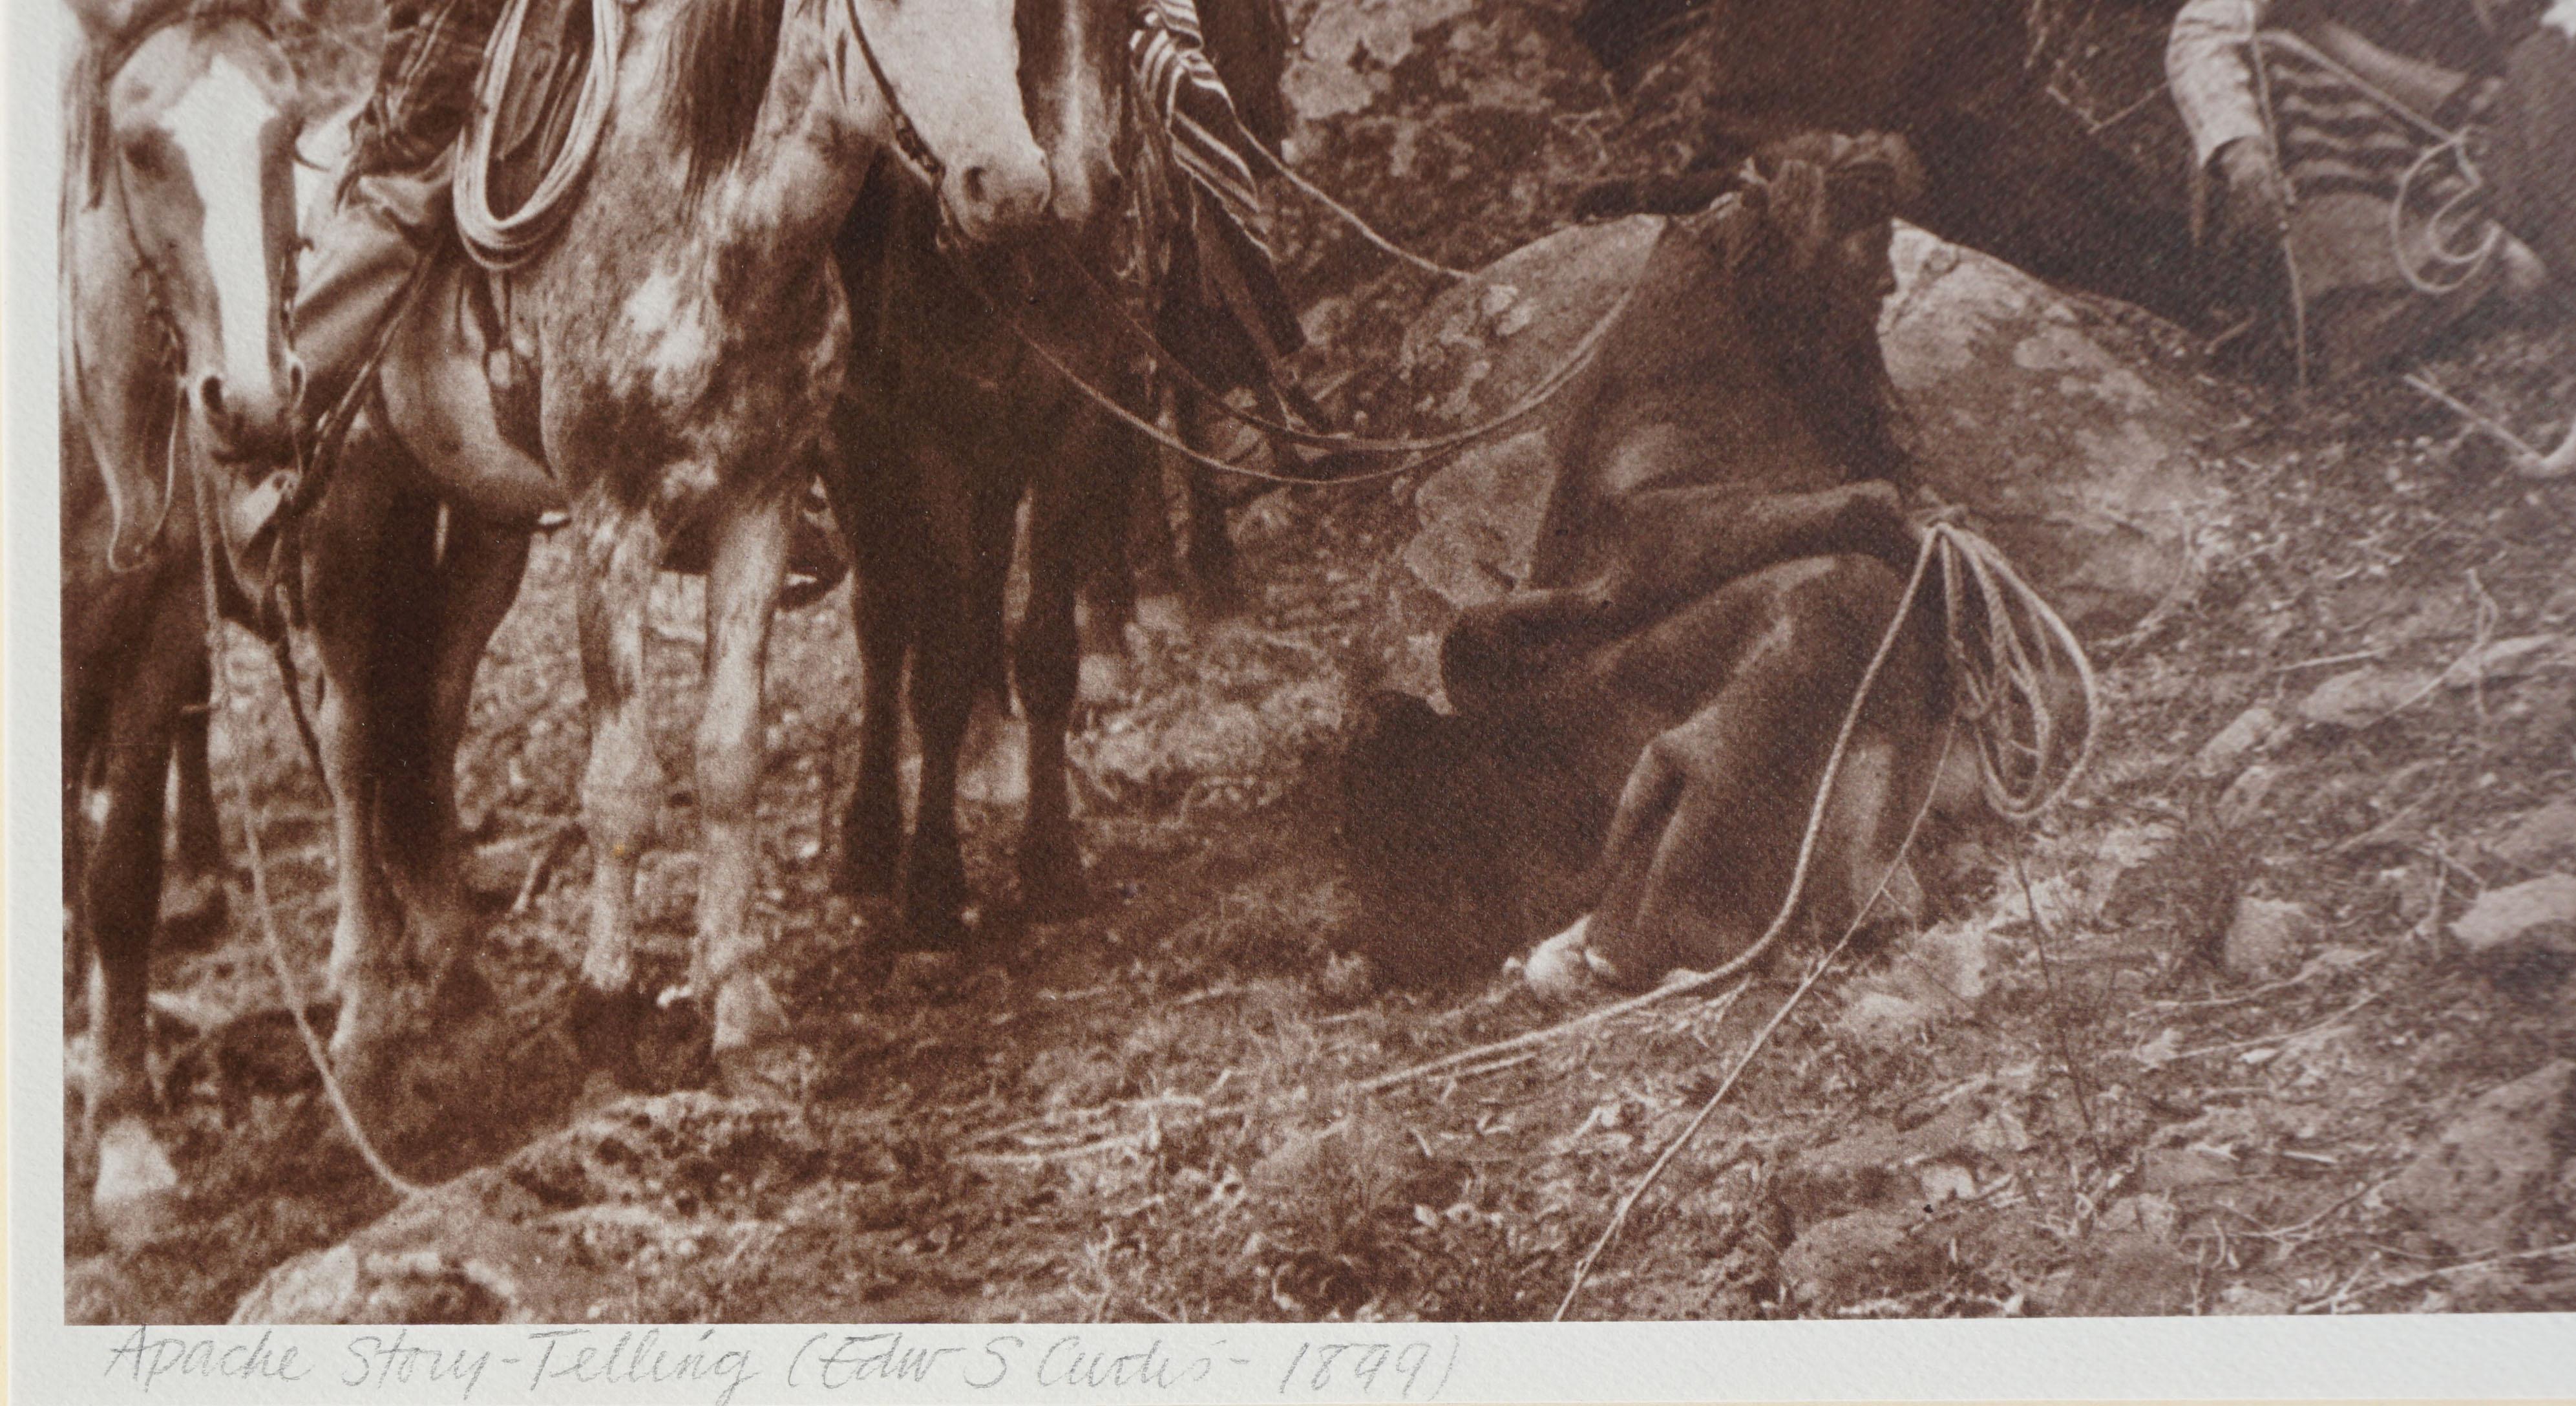 Apache Story Telling - Photorealist Photograph by Edward Sheriff Curtis